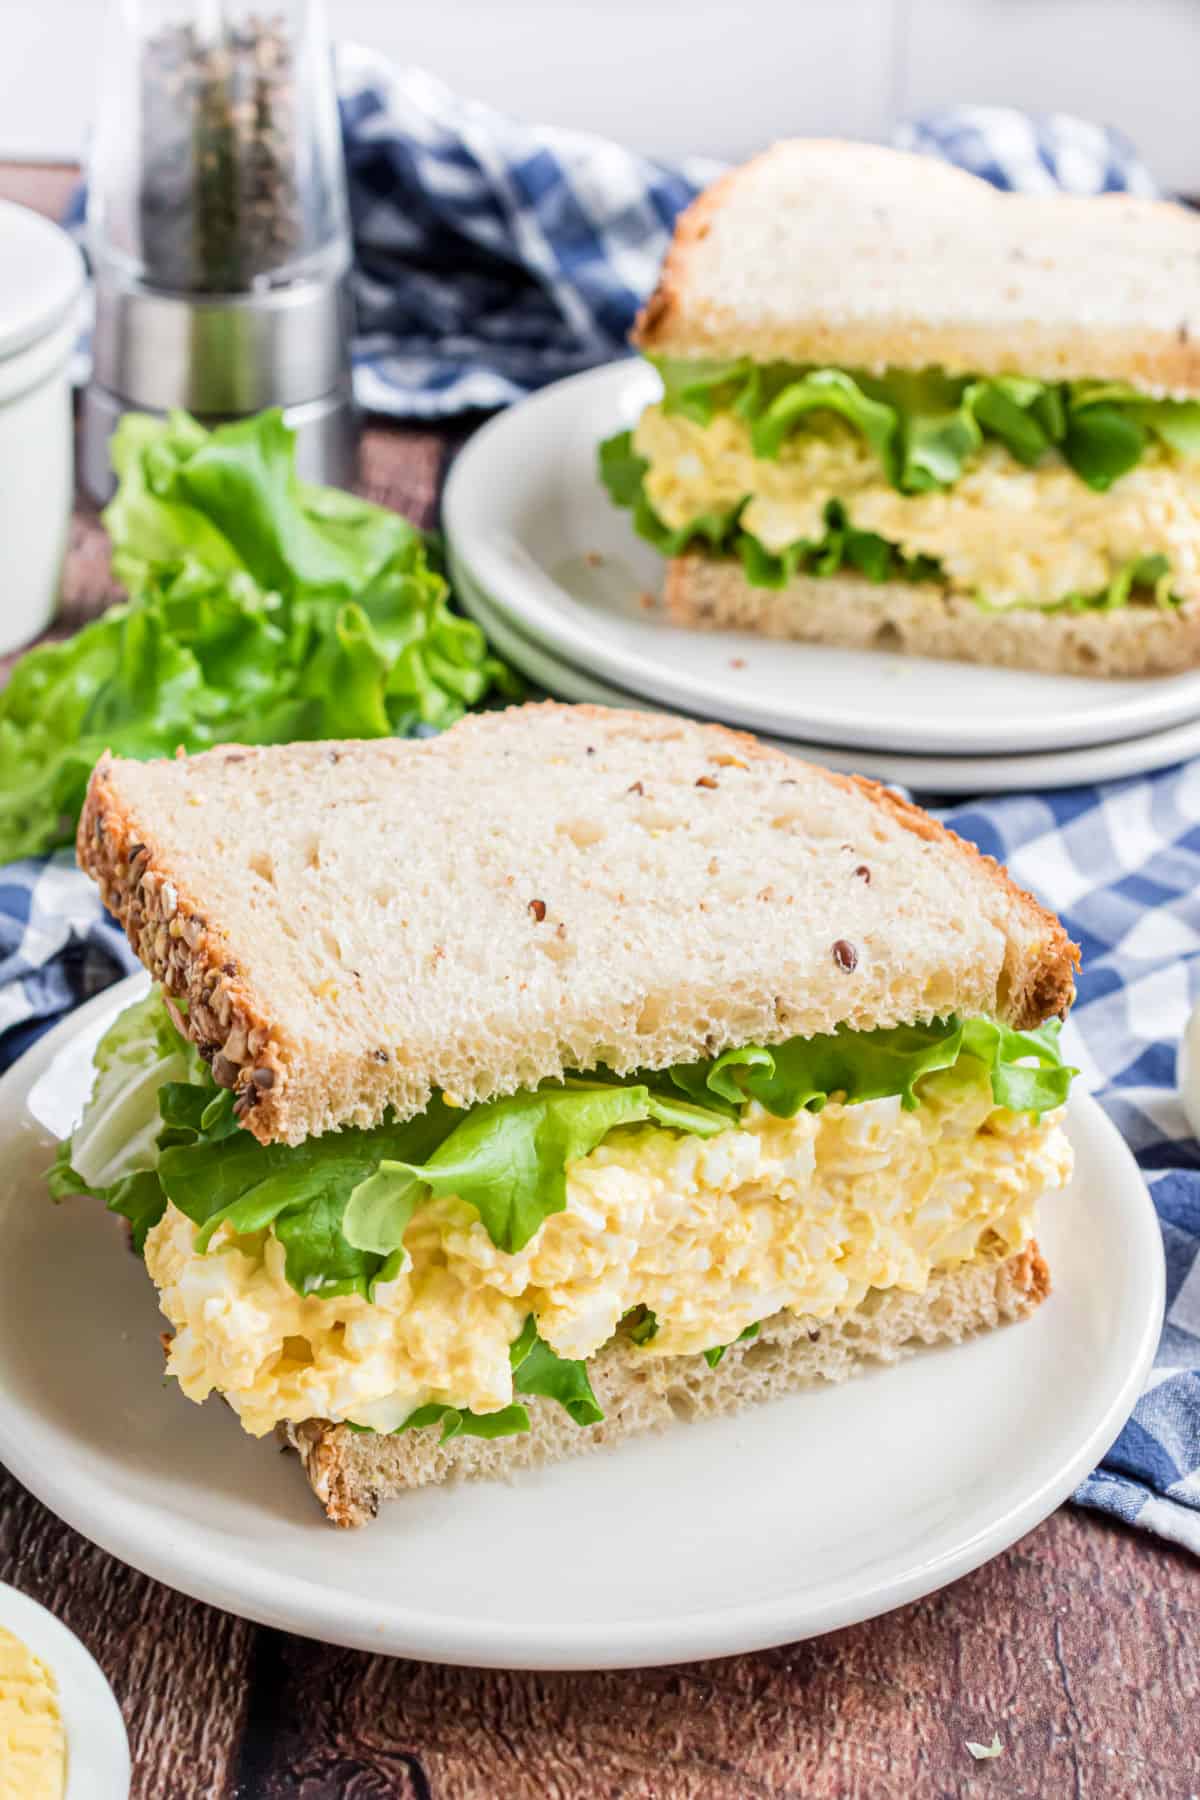 Classic Egg Salad Sandwich (with Homemade Mayonnaise) - A